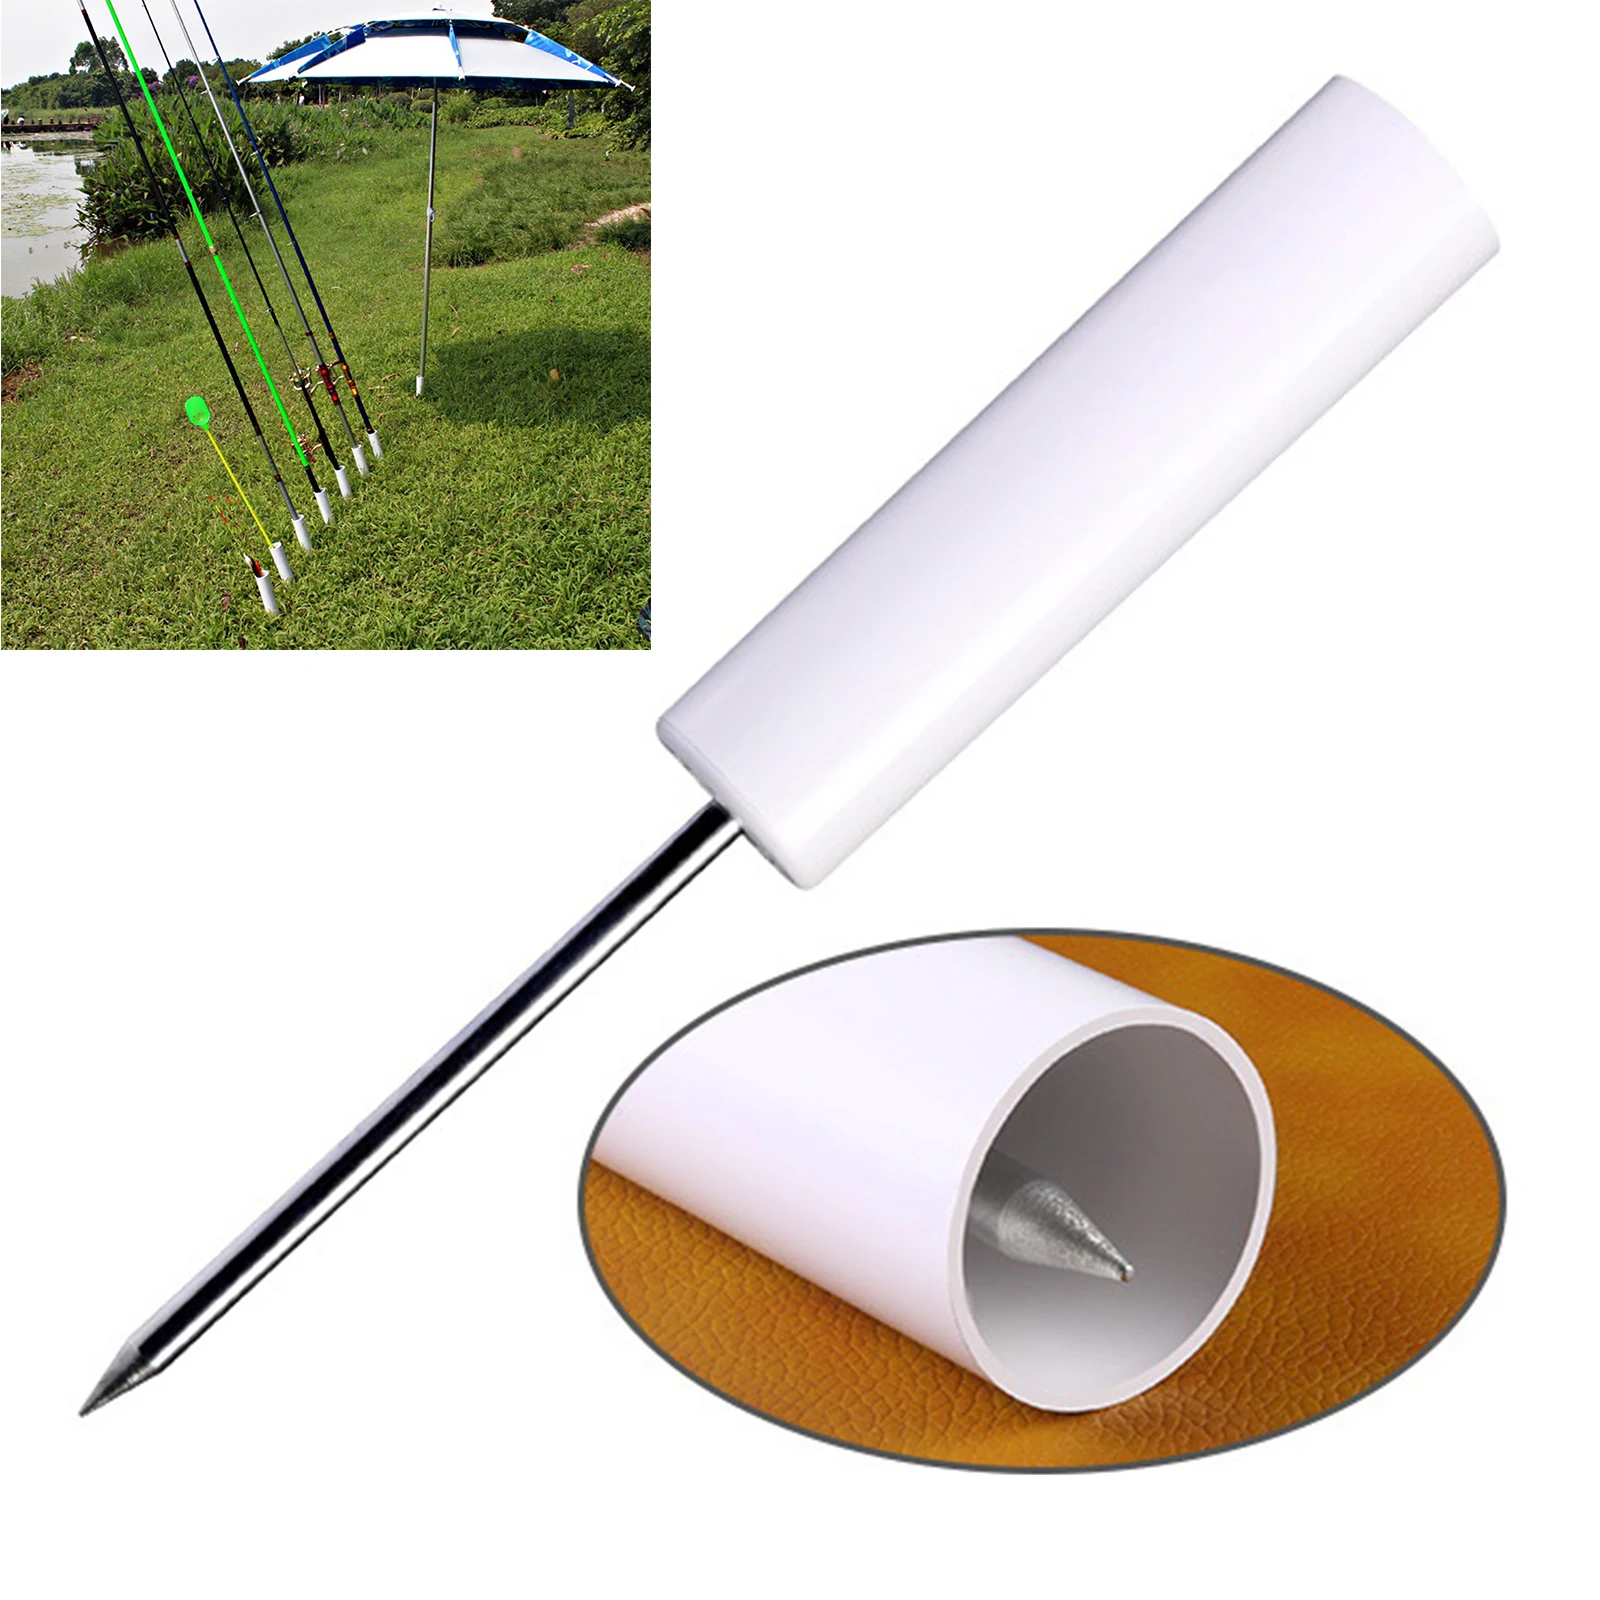 Fishing Rod Pole Holder Insert Ground Support PVC for Shore Fishing Fishing